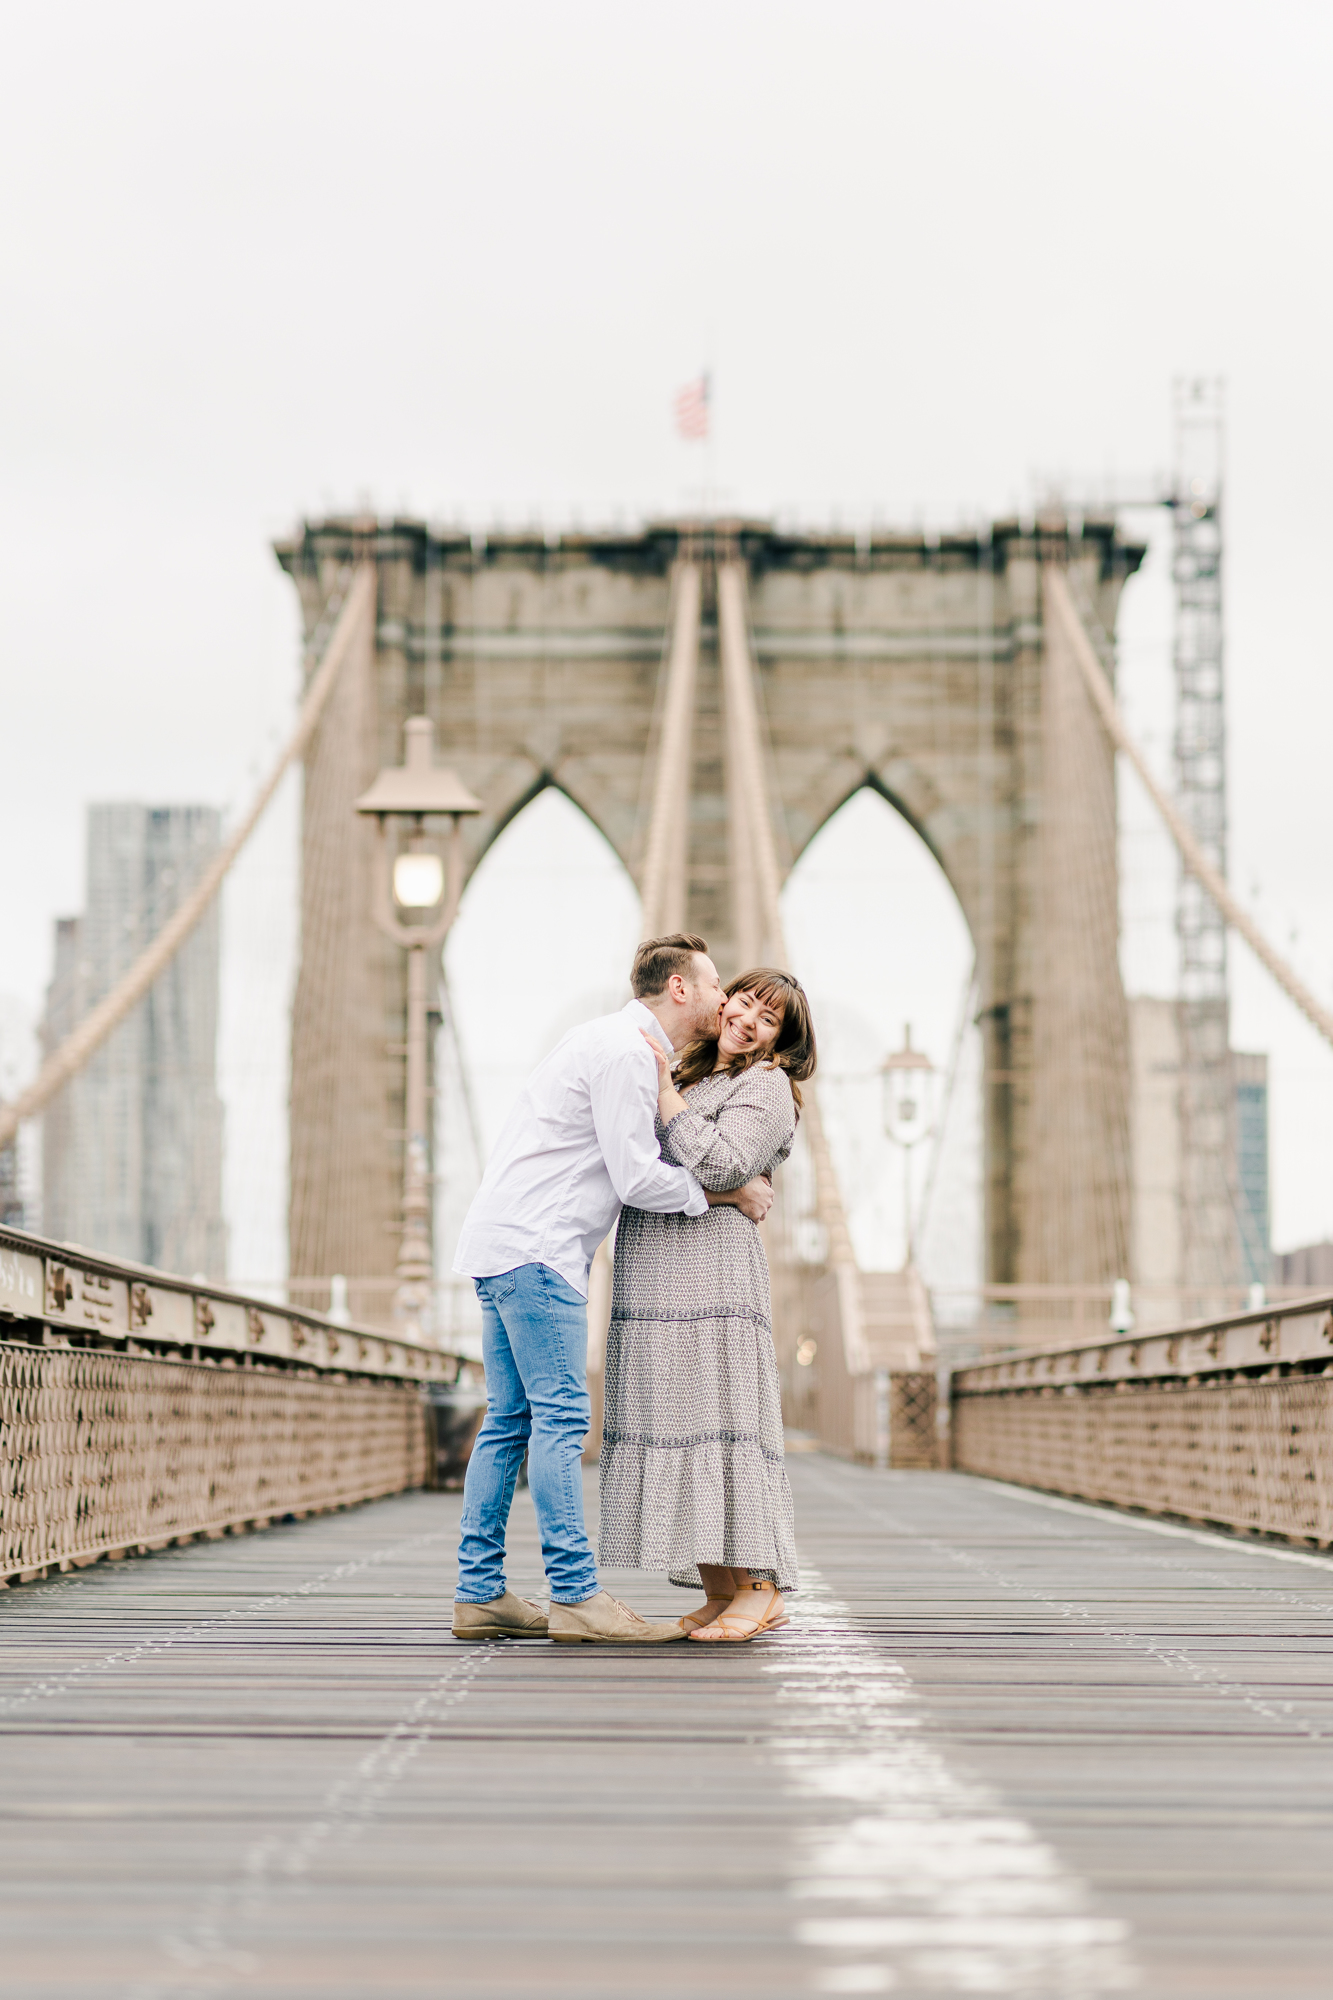 Breath-Taking New York Engagement Photos on the Brooklyn Bridge